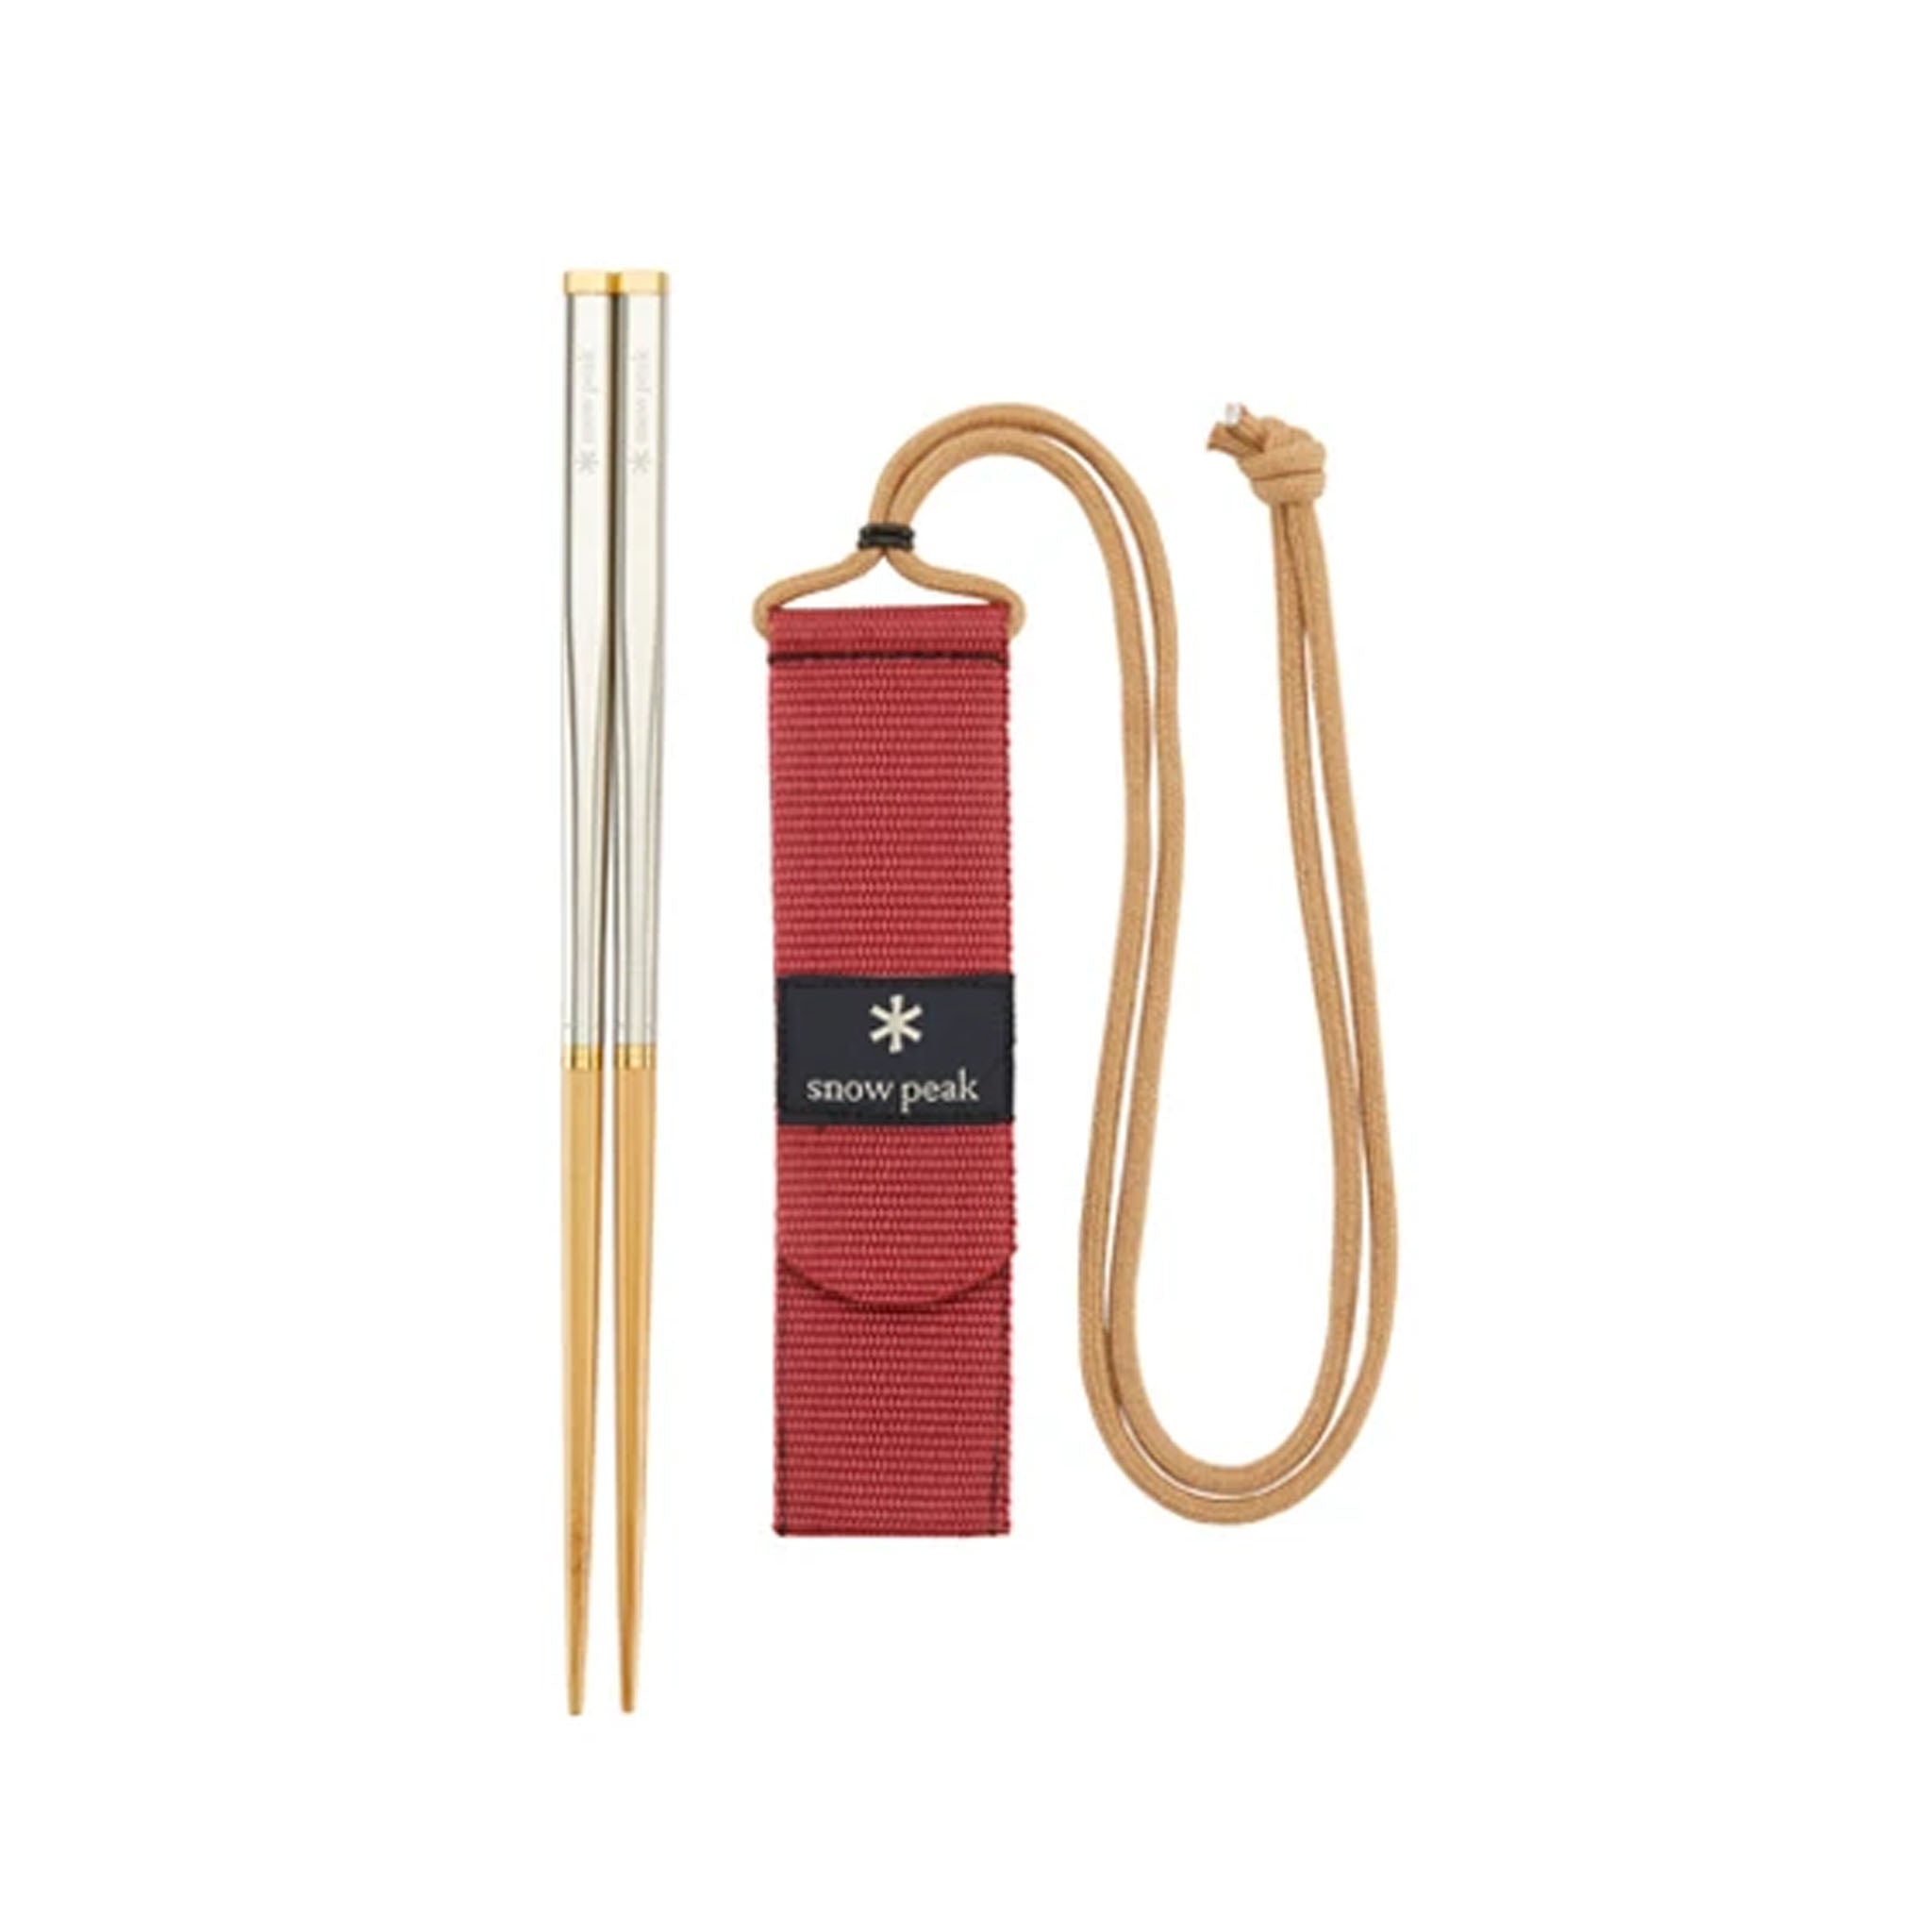 Snow Peak Wabuki Chopsticks (Bamboo/Stainless Steel/Brass) - August Shop